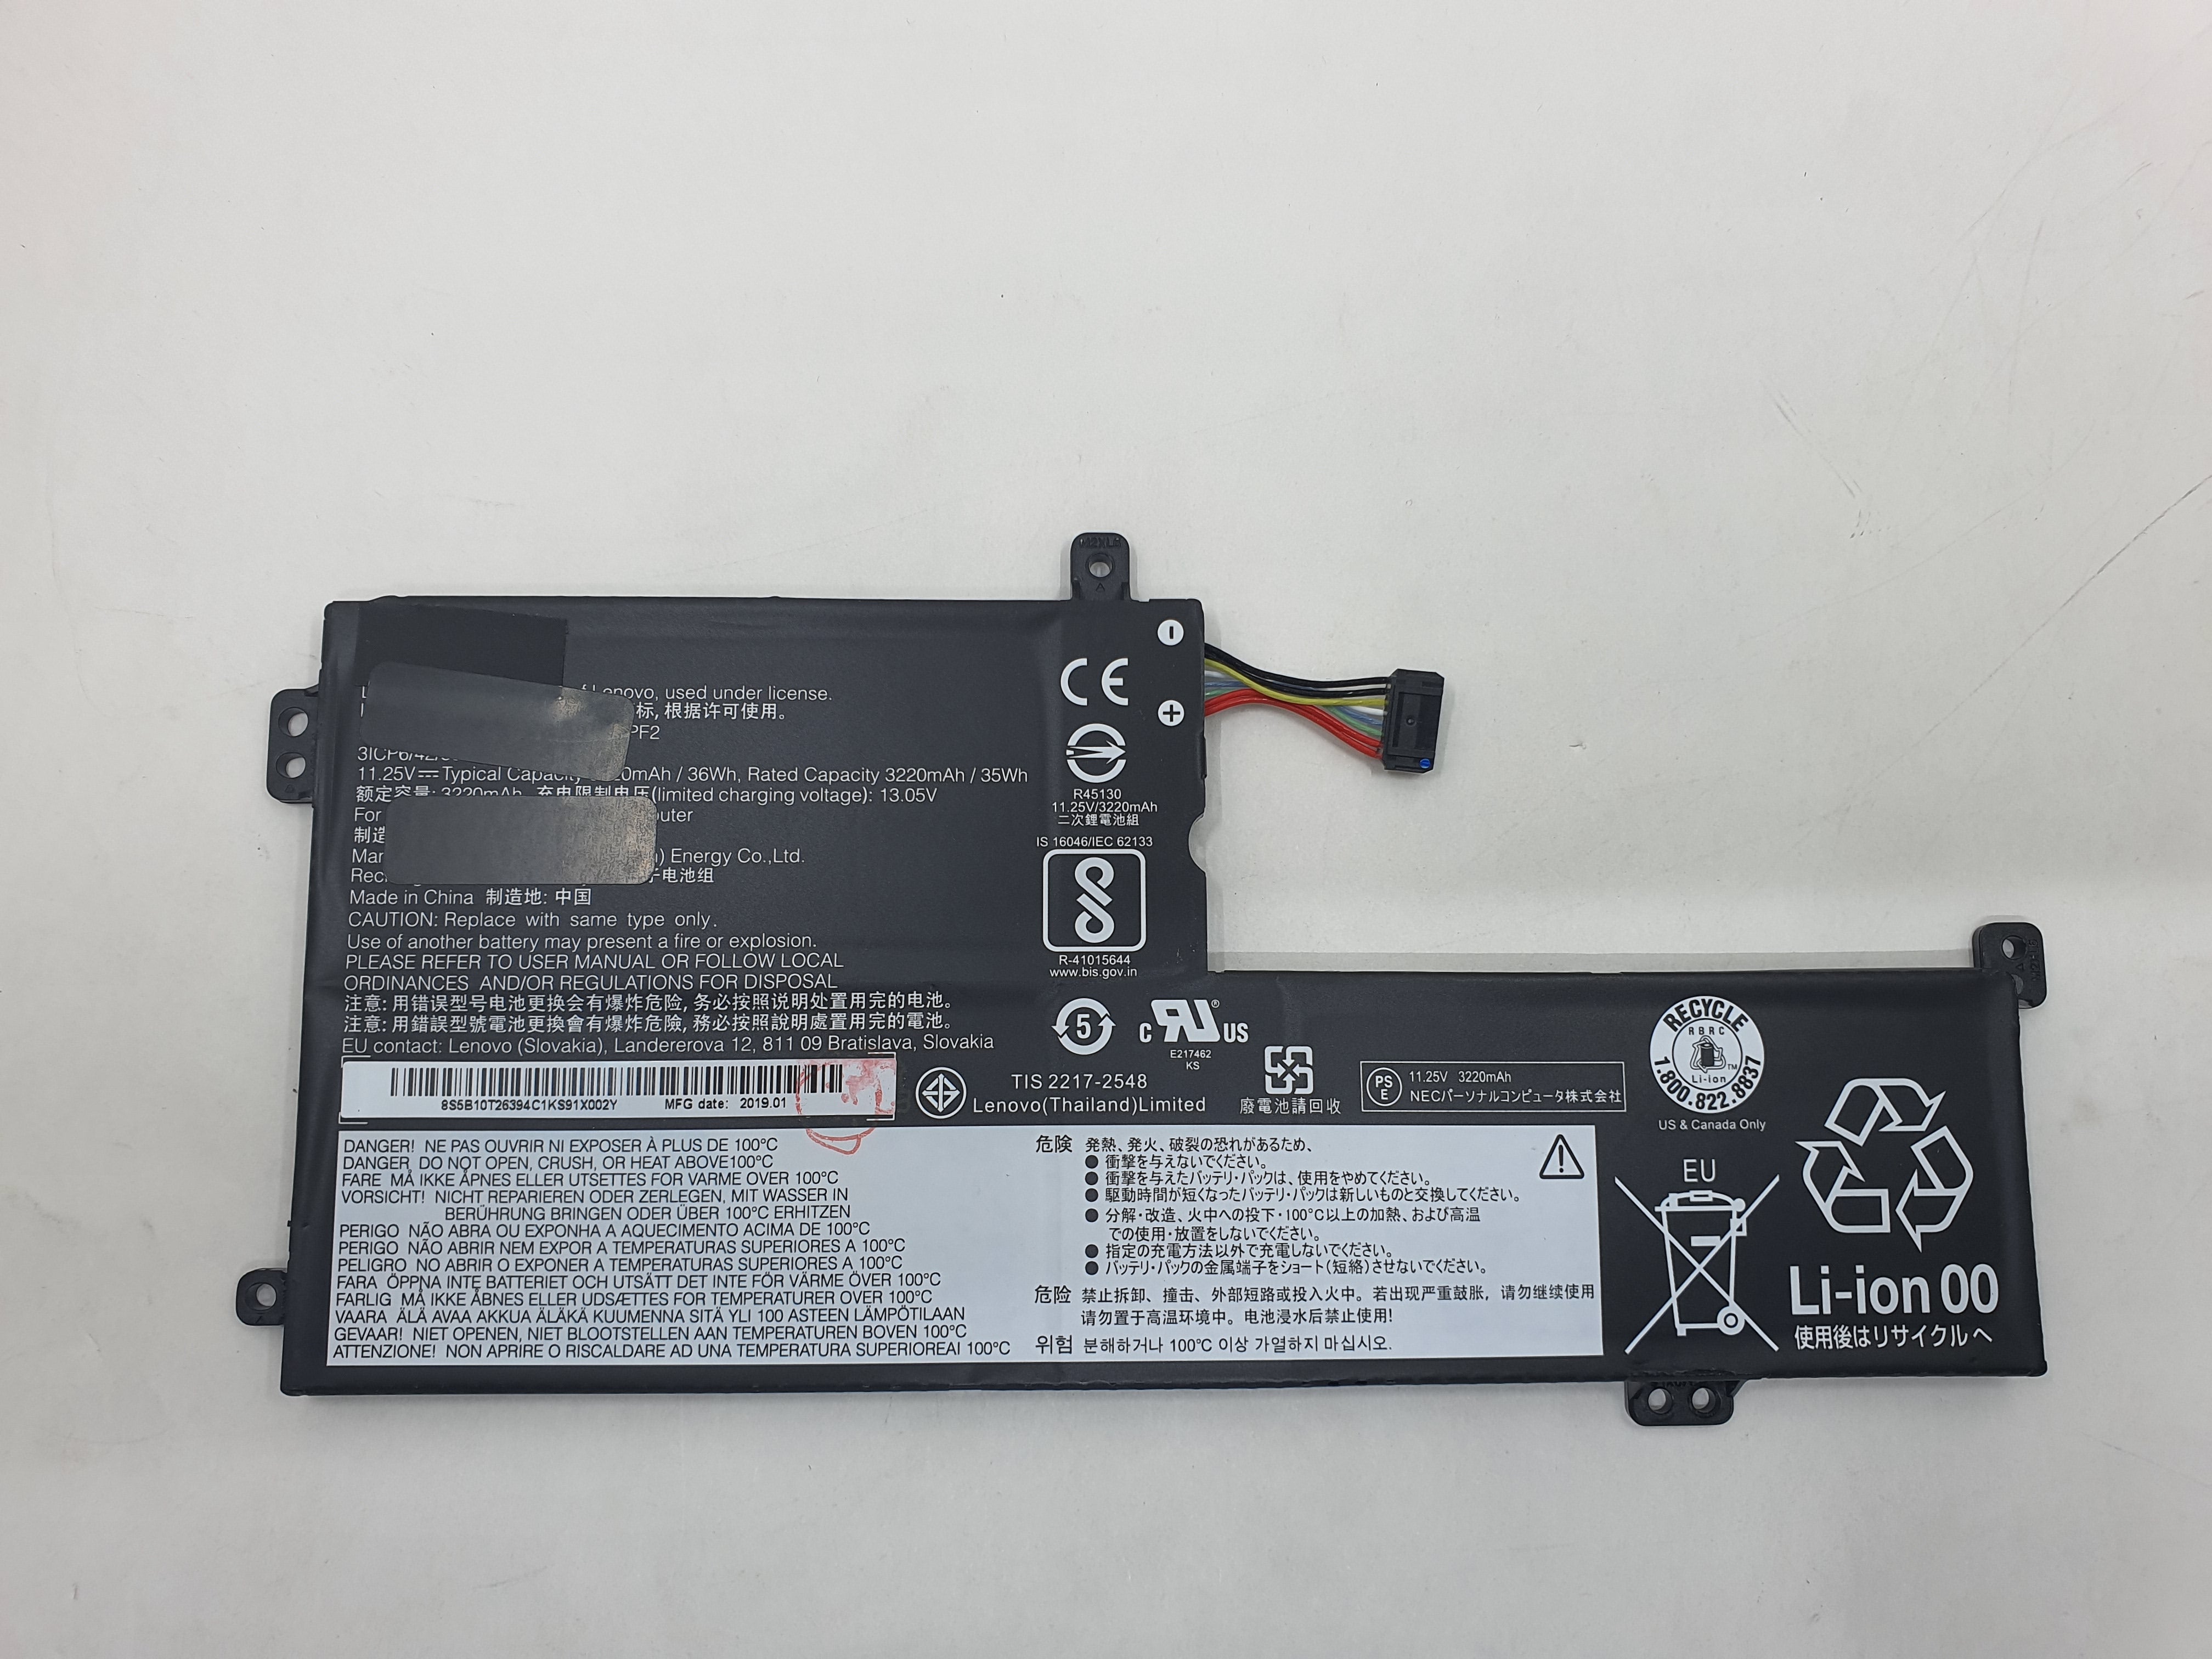 Lenovo Battery IdeaPad S340-15IIL WL for Lenovo IdeaPad S340-15IIL